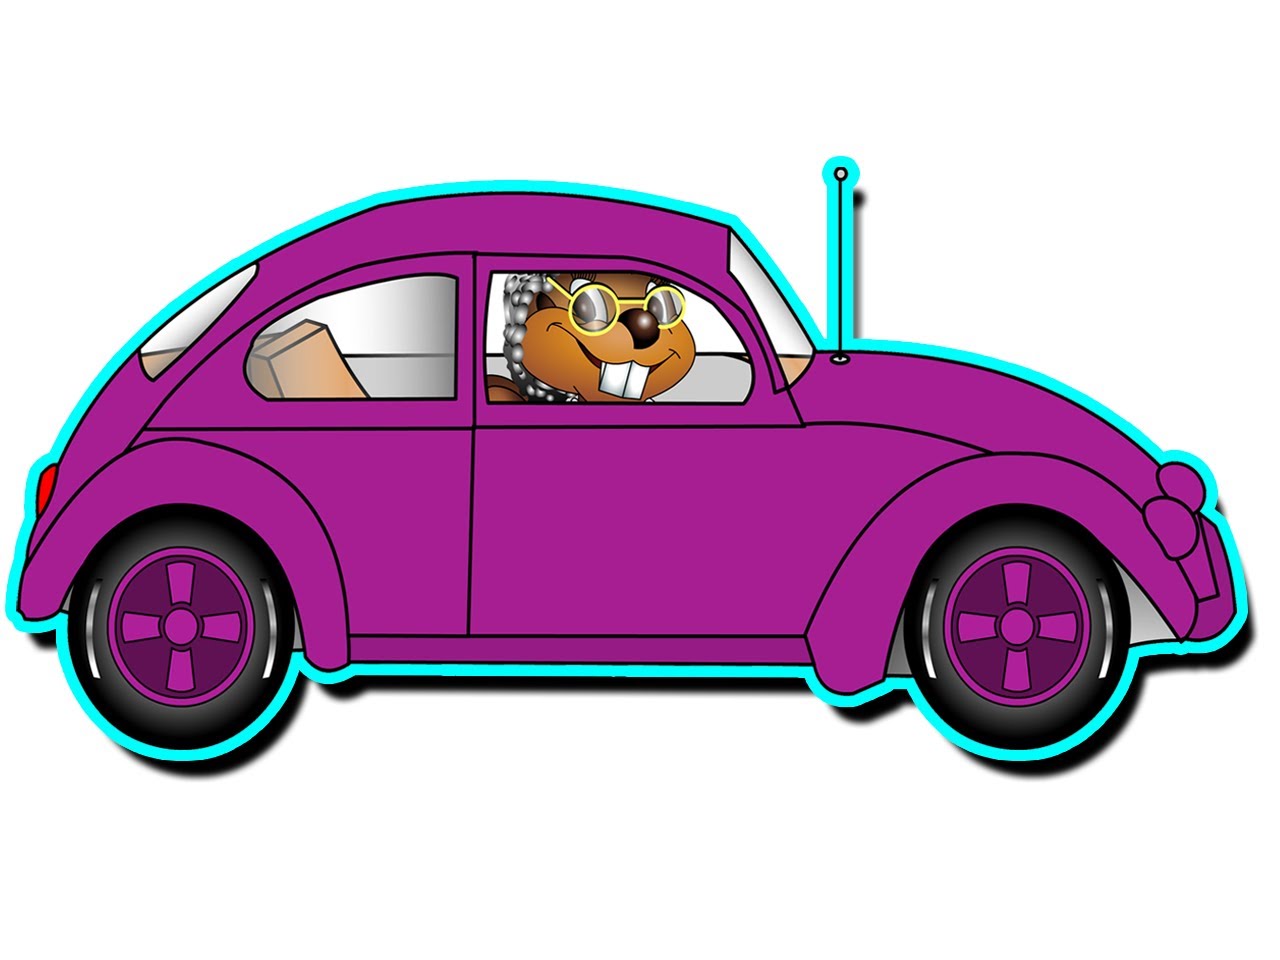 Grandma's Got a Little Purple Car" - Kids Learn Colors, Funny Song ...